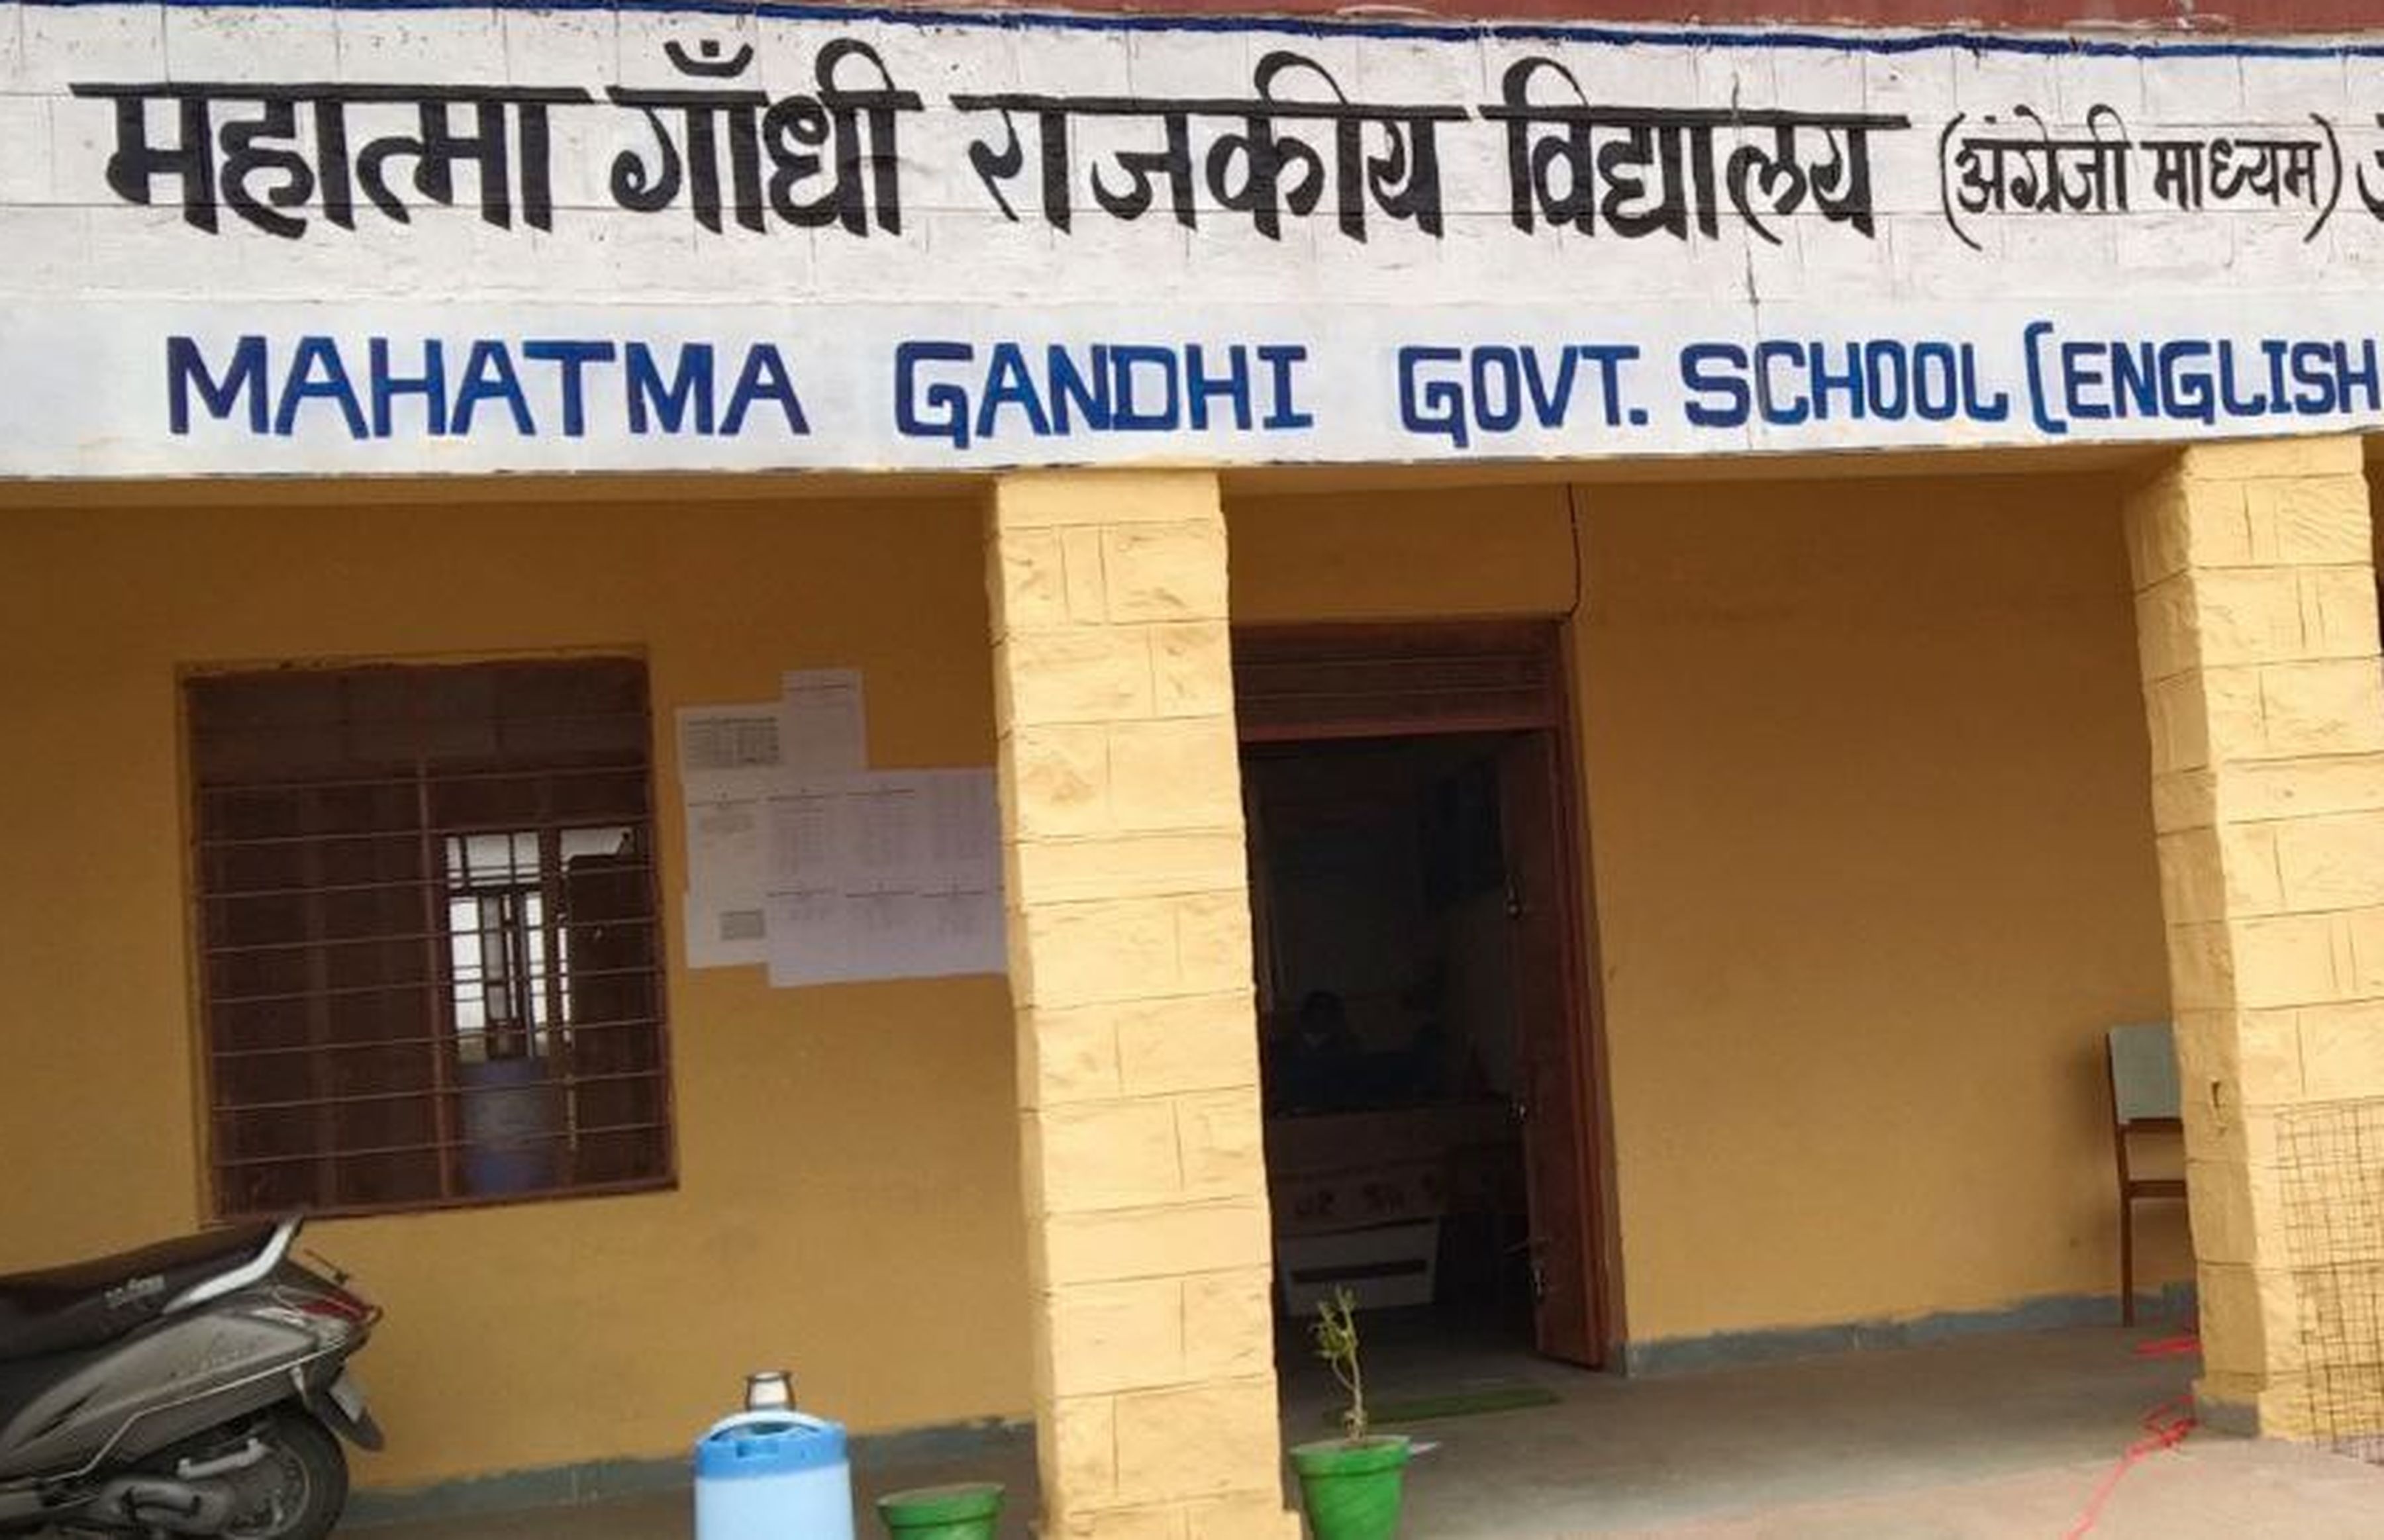 Mahatma Gandhi School in Rajasthan